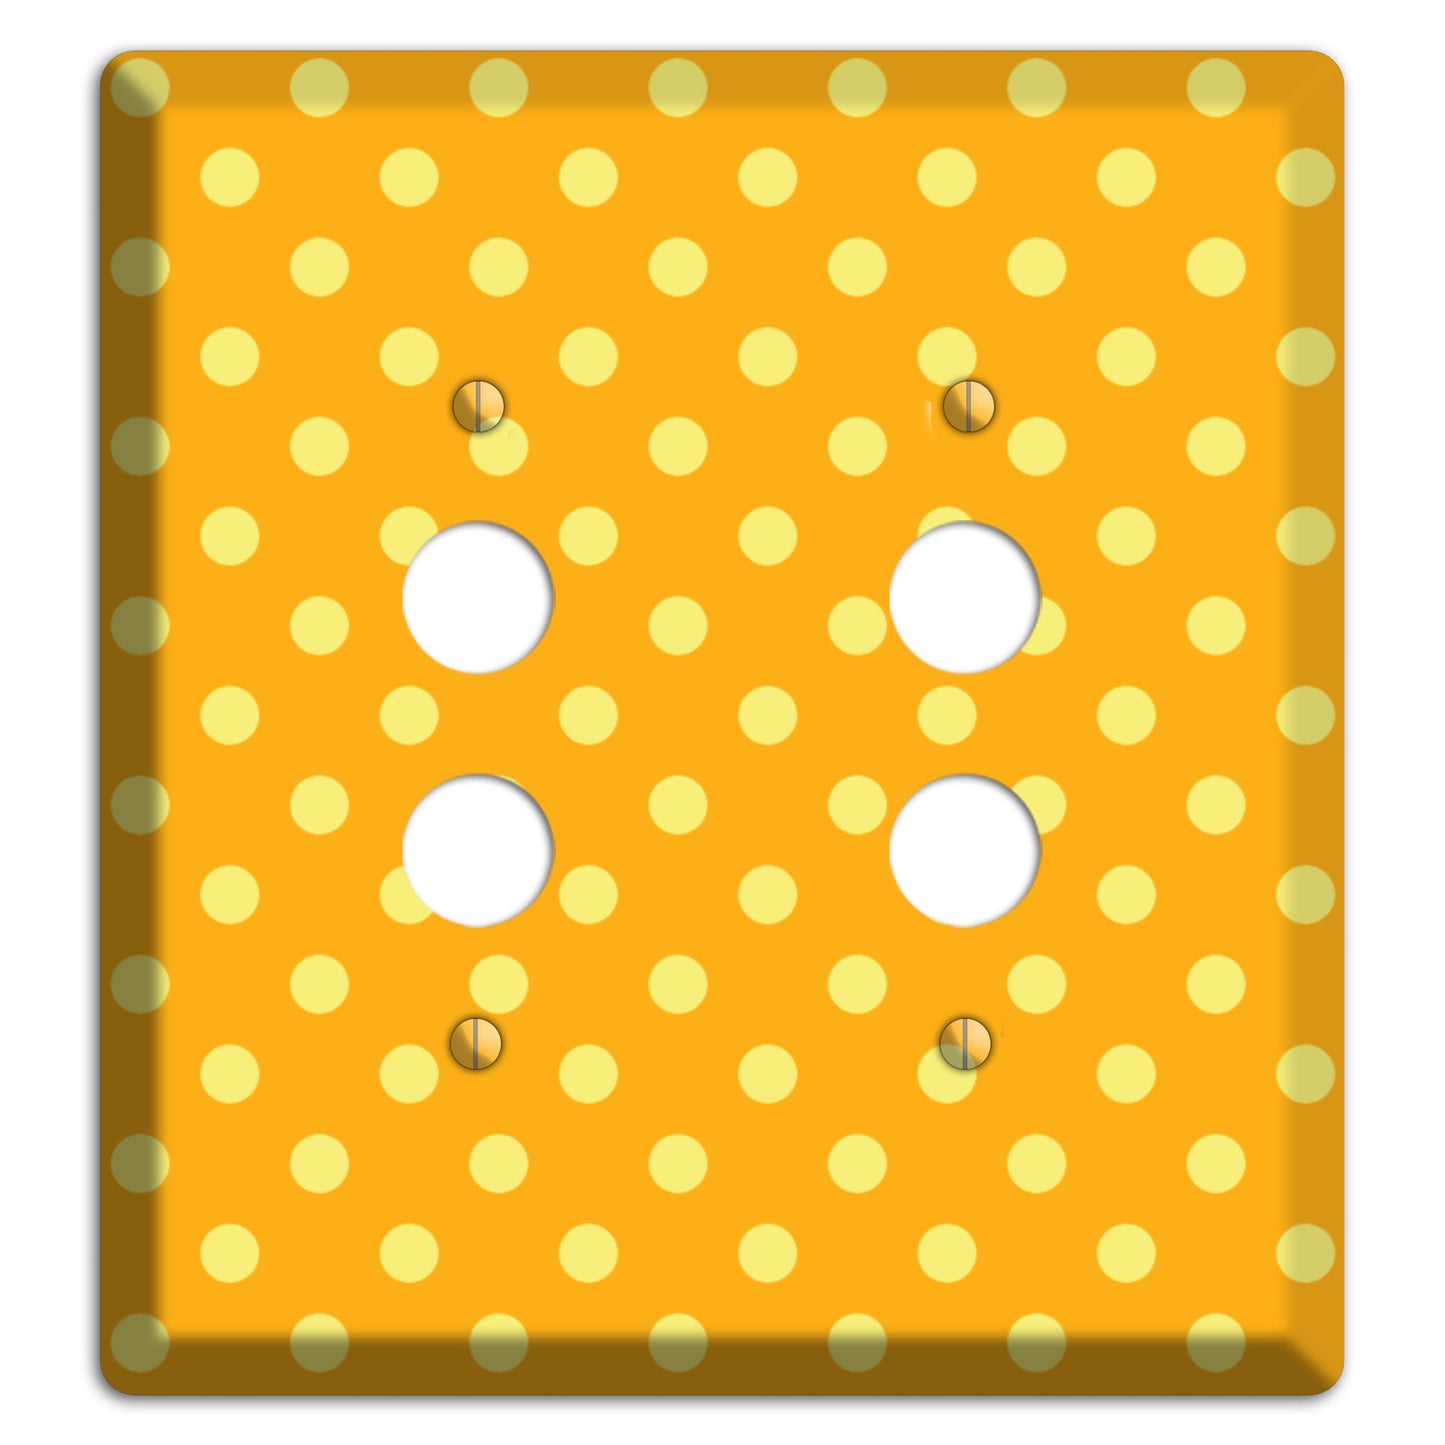 Orange and Yellow Polka Dot 2 Pushbutton Wallplate